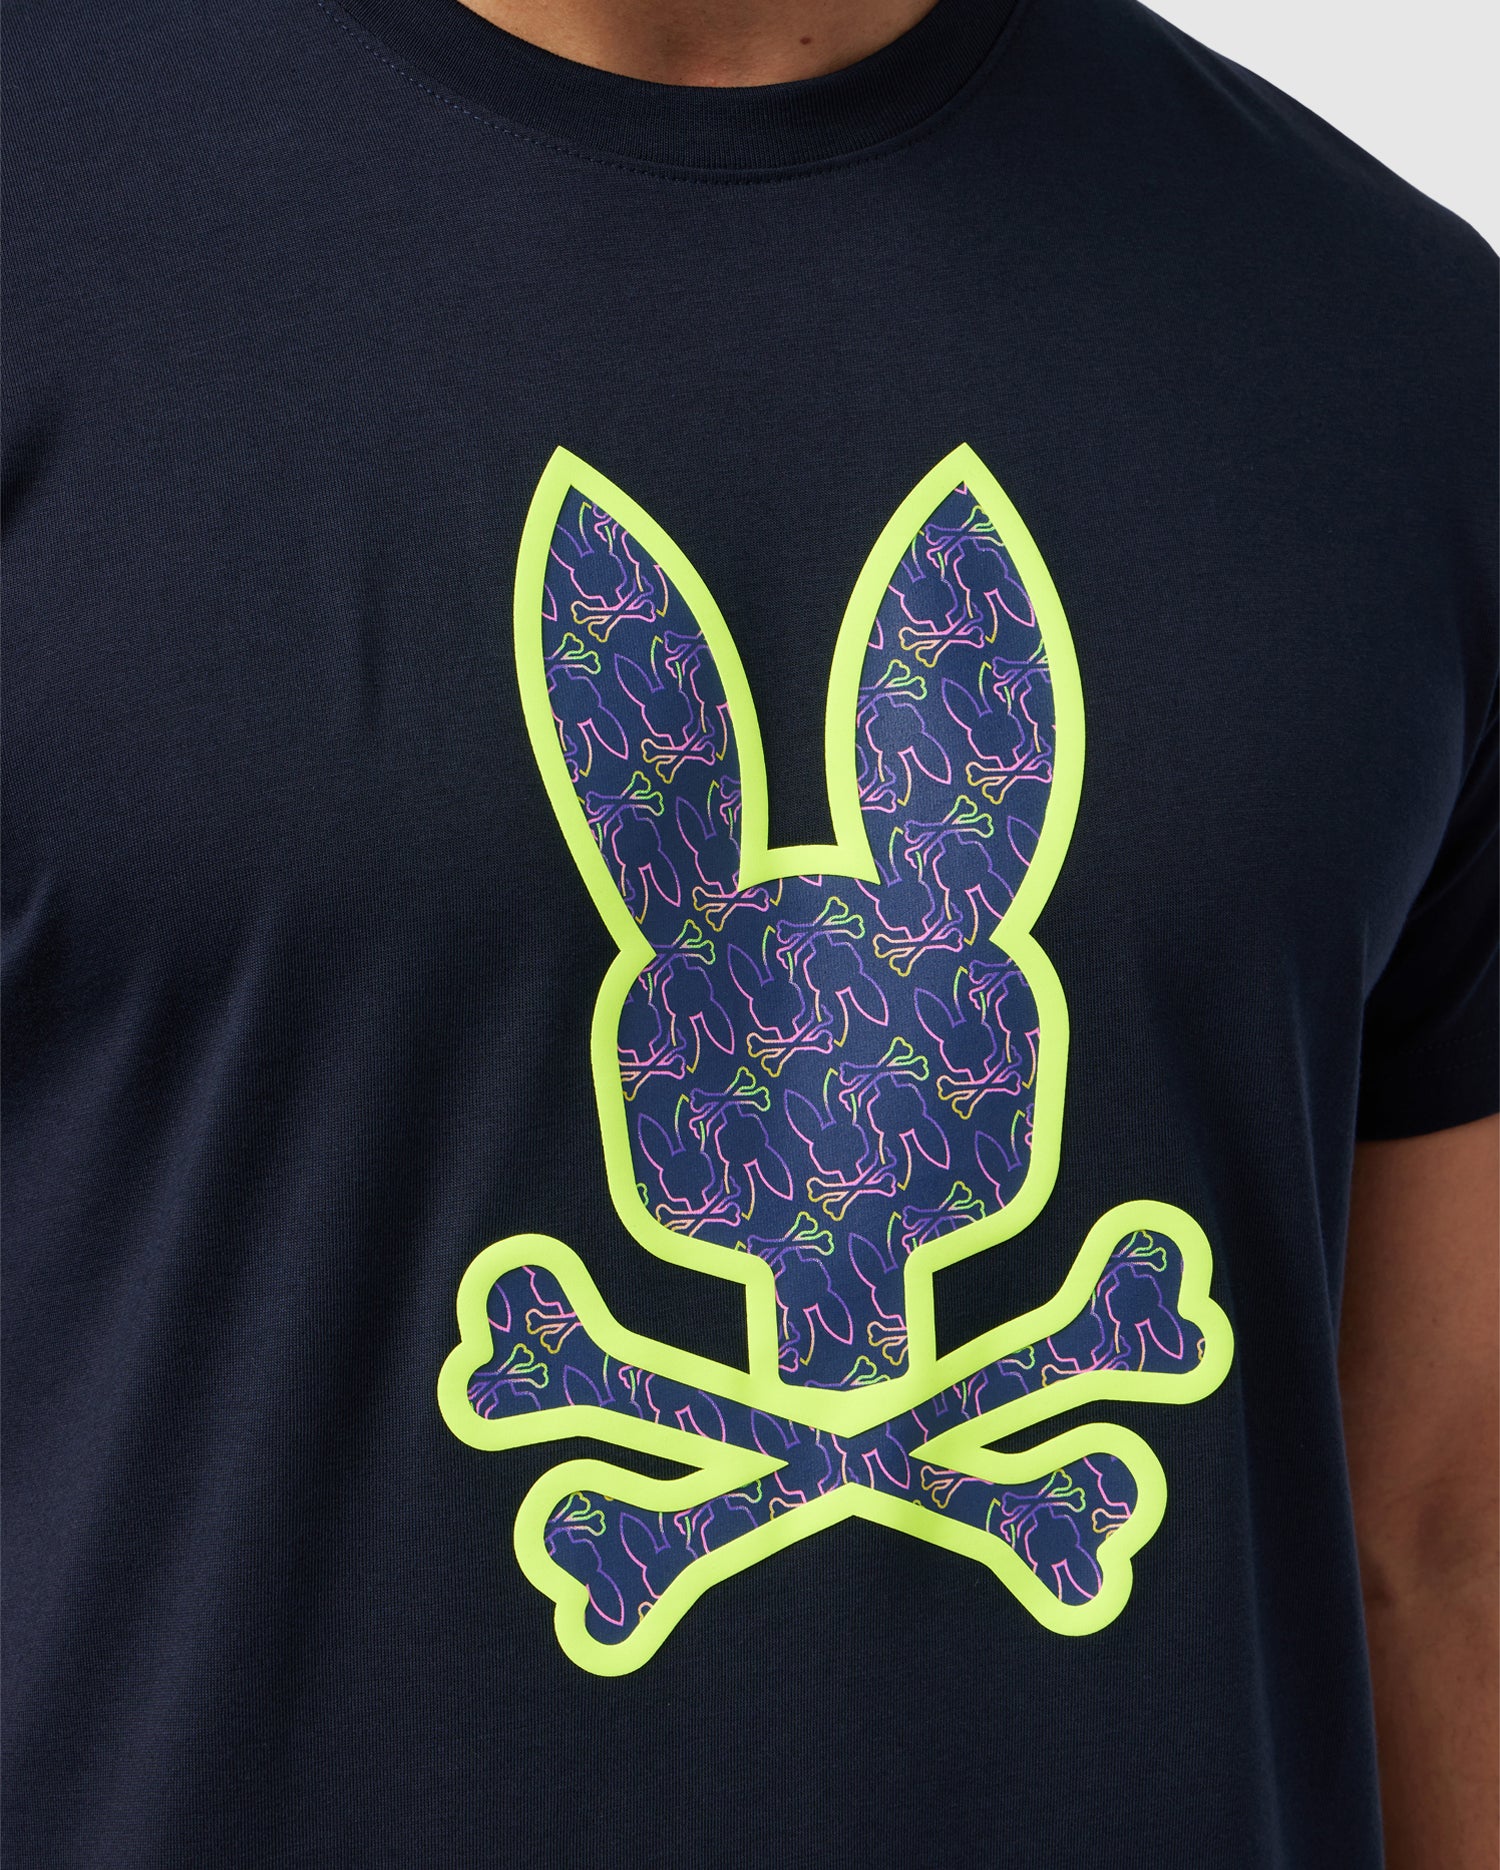 Psycho bunny 🐰 T-shirt $11,000 Psycho bunny 🐰 shorts $18,000